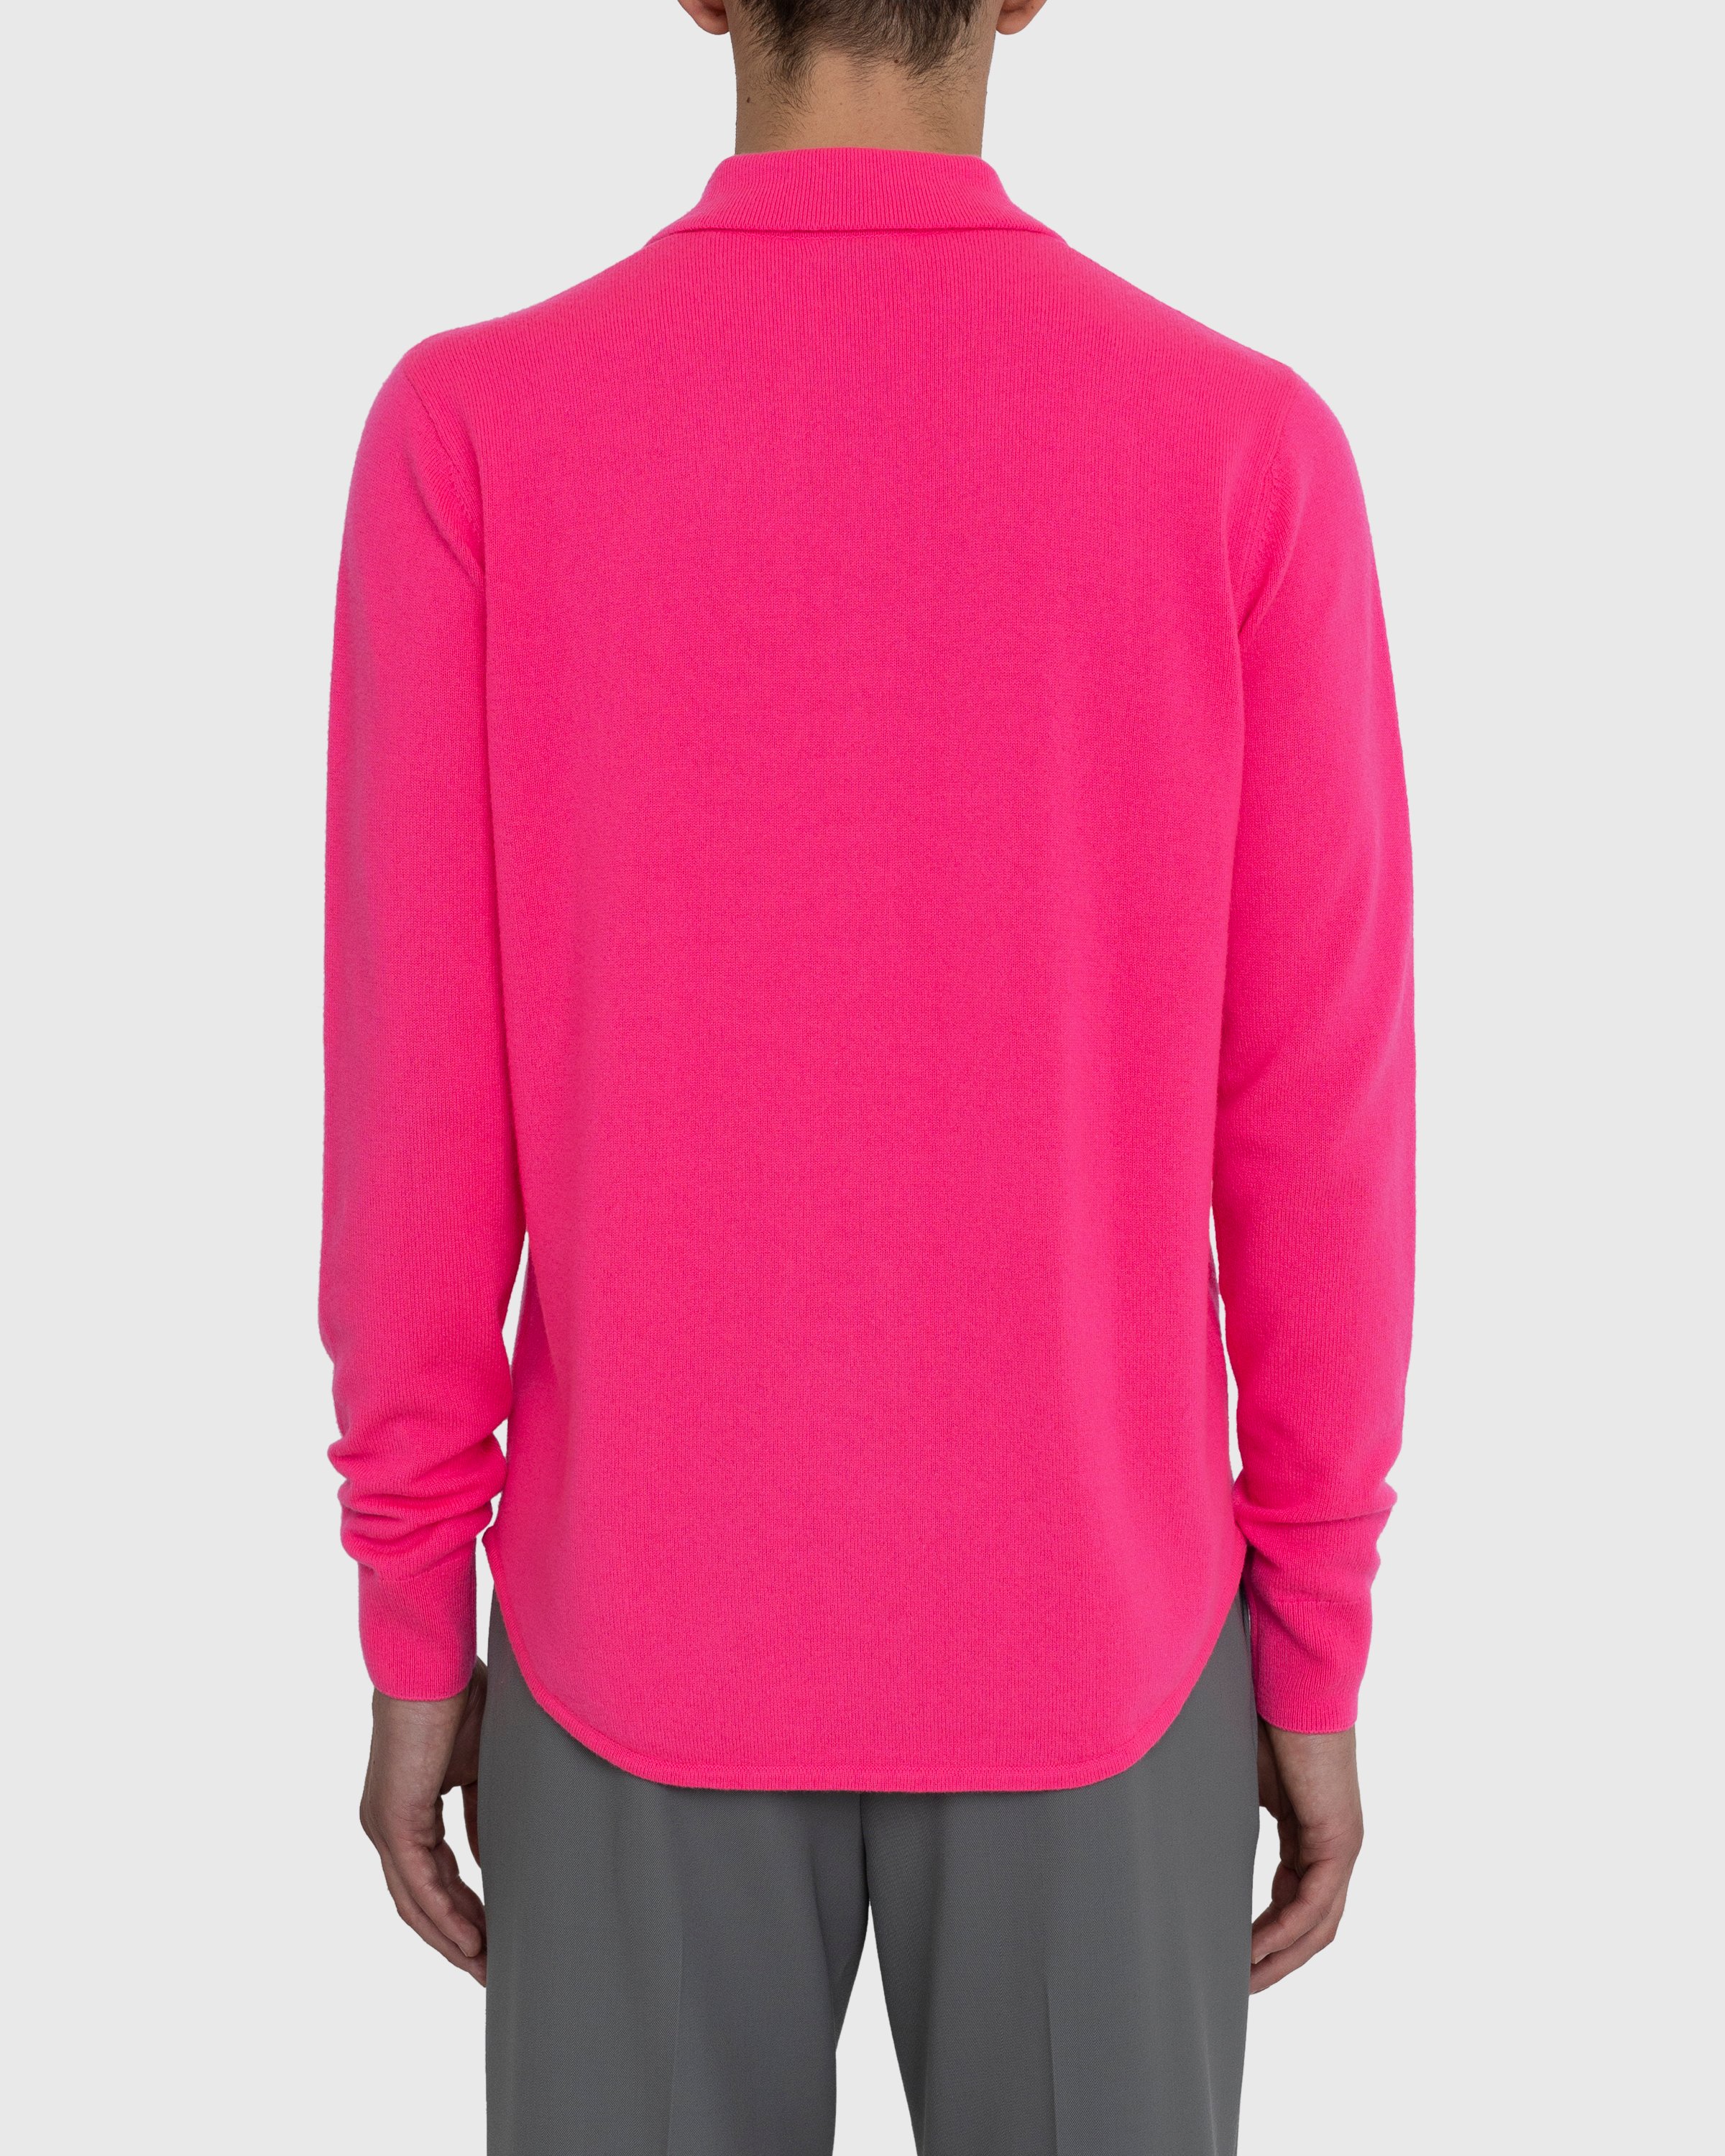 Dries van Noten - Never Cardigan - Clothing - Pink - Image 4